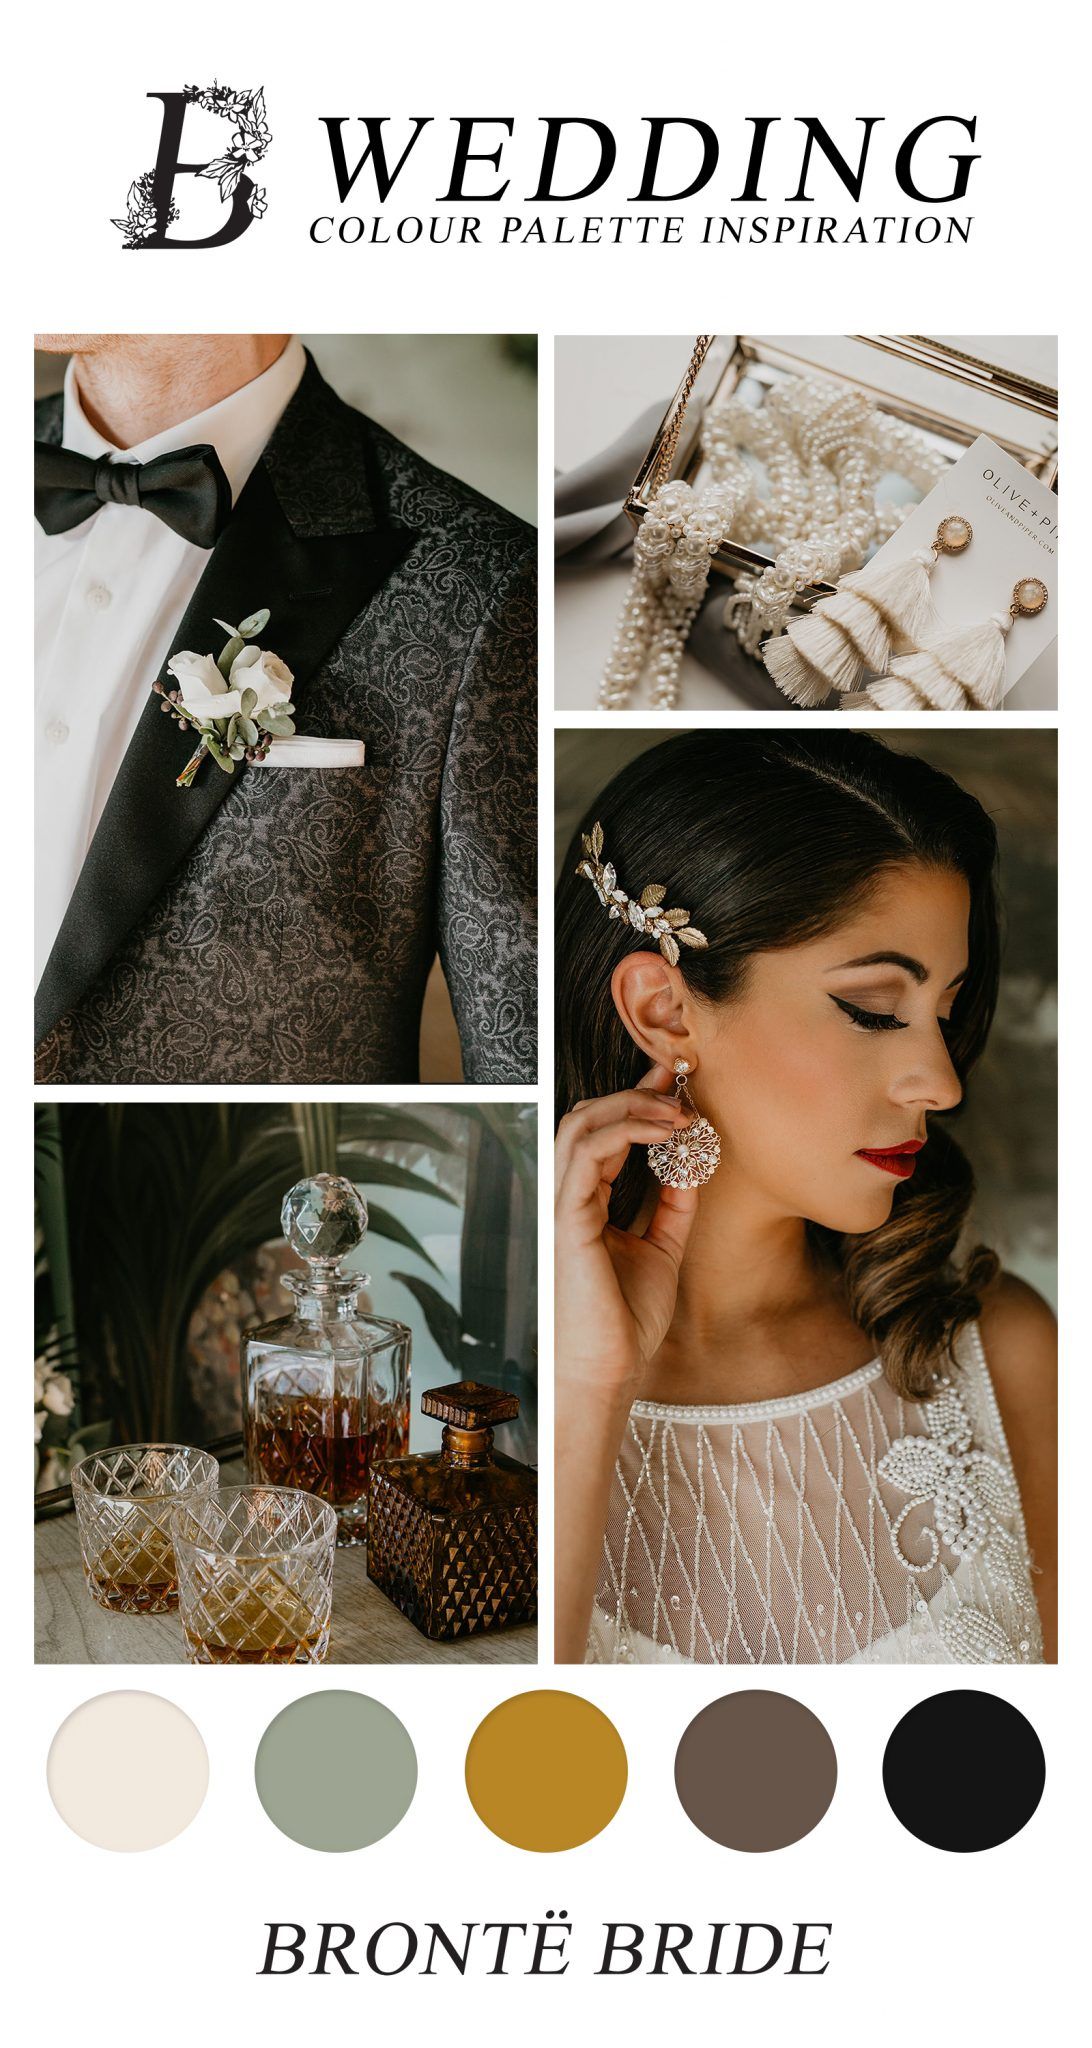 Vintage Wedding Colour Palette Inspiration, great gatsby inspired wedding decor